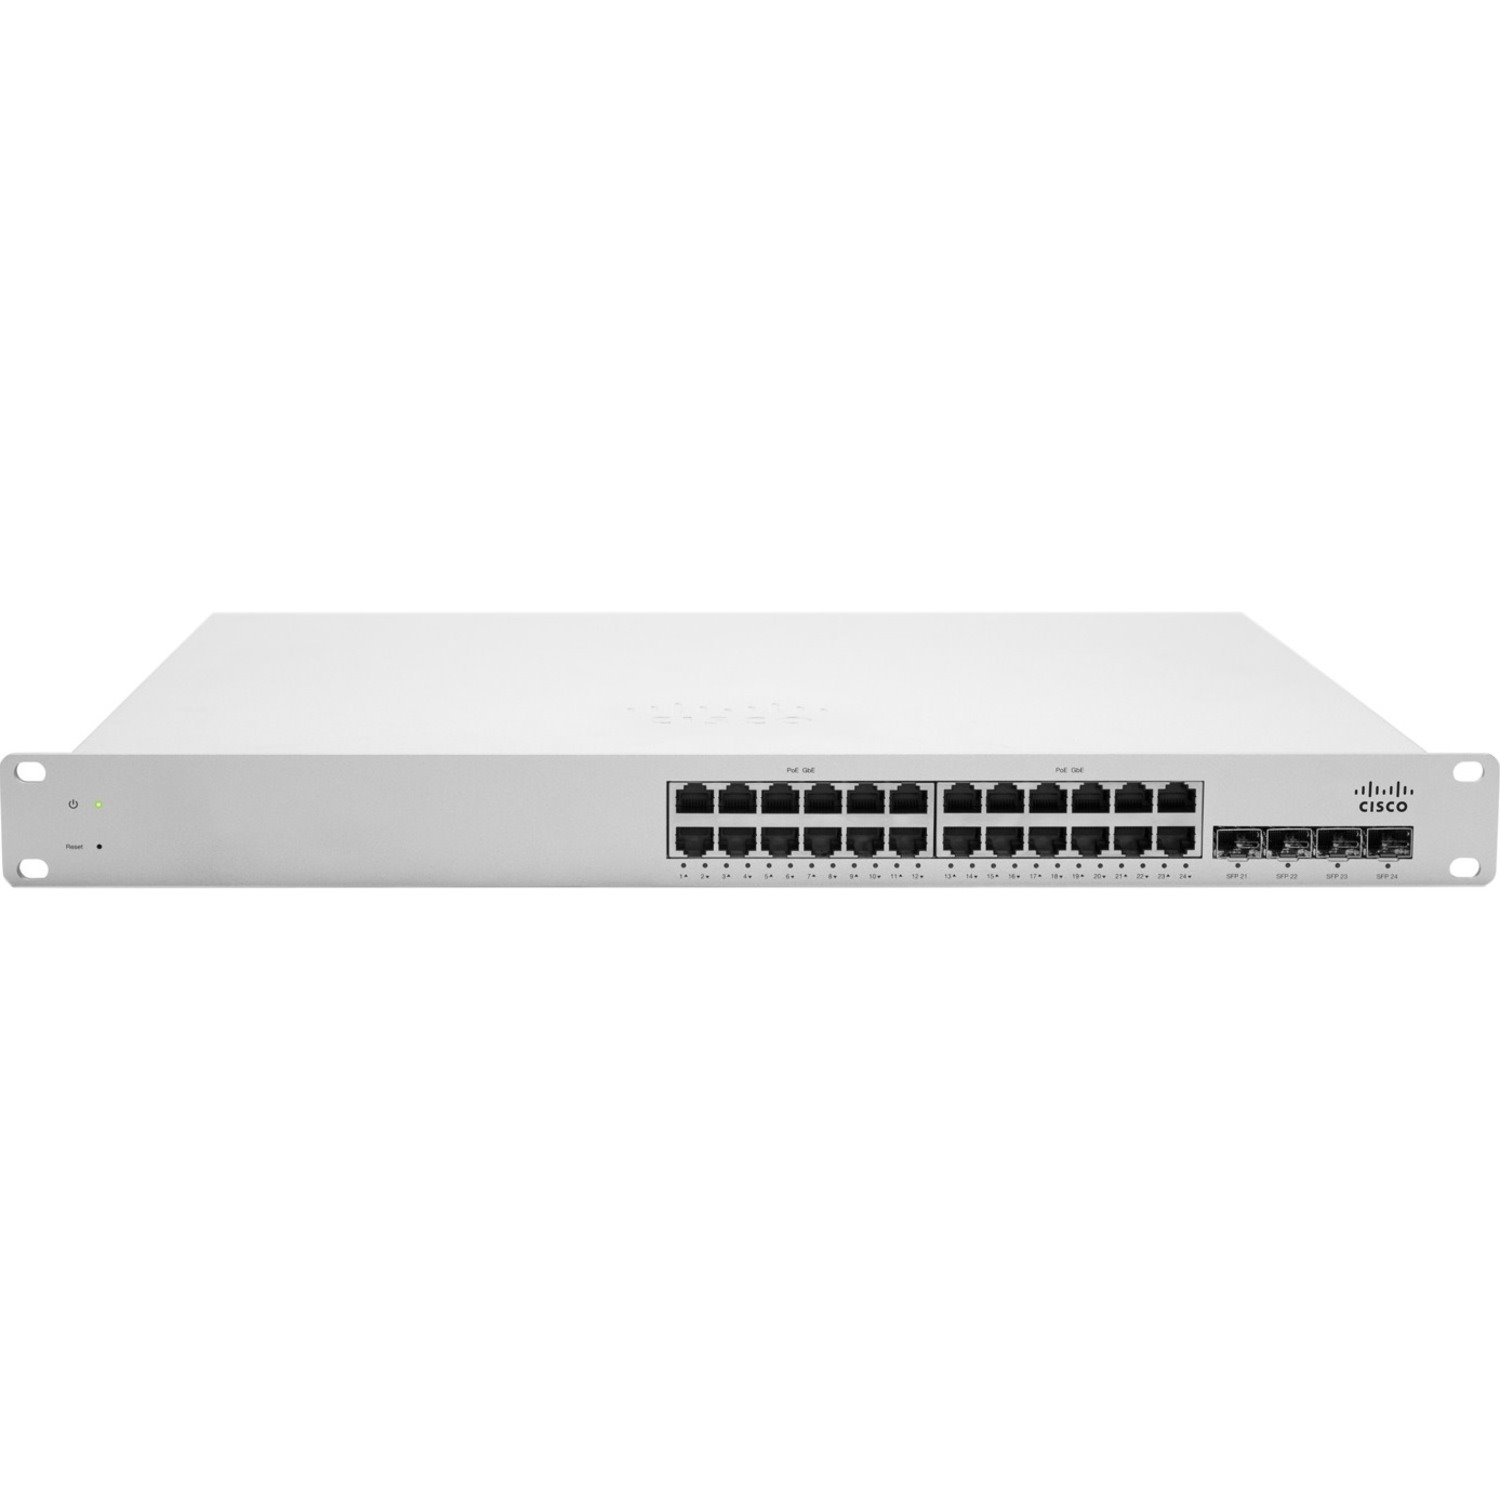 Meraki MS320-24 L3 Cloud Managed 24 Port GigE Switch